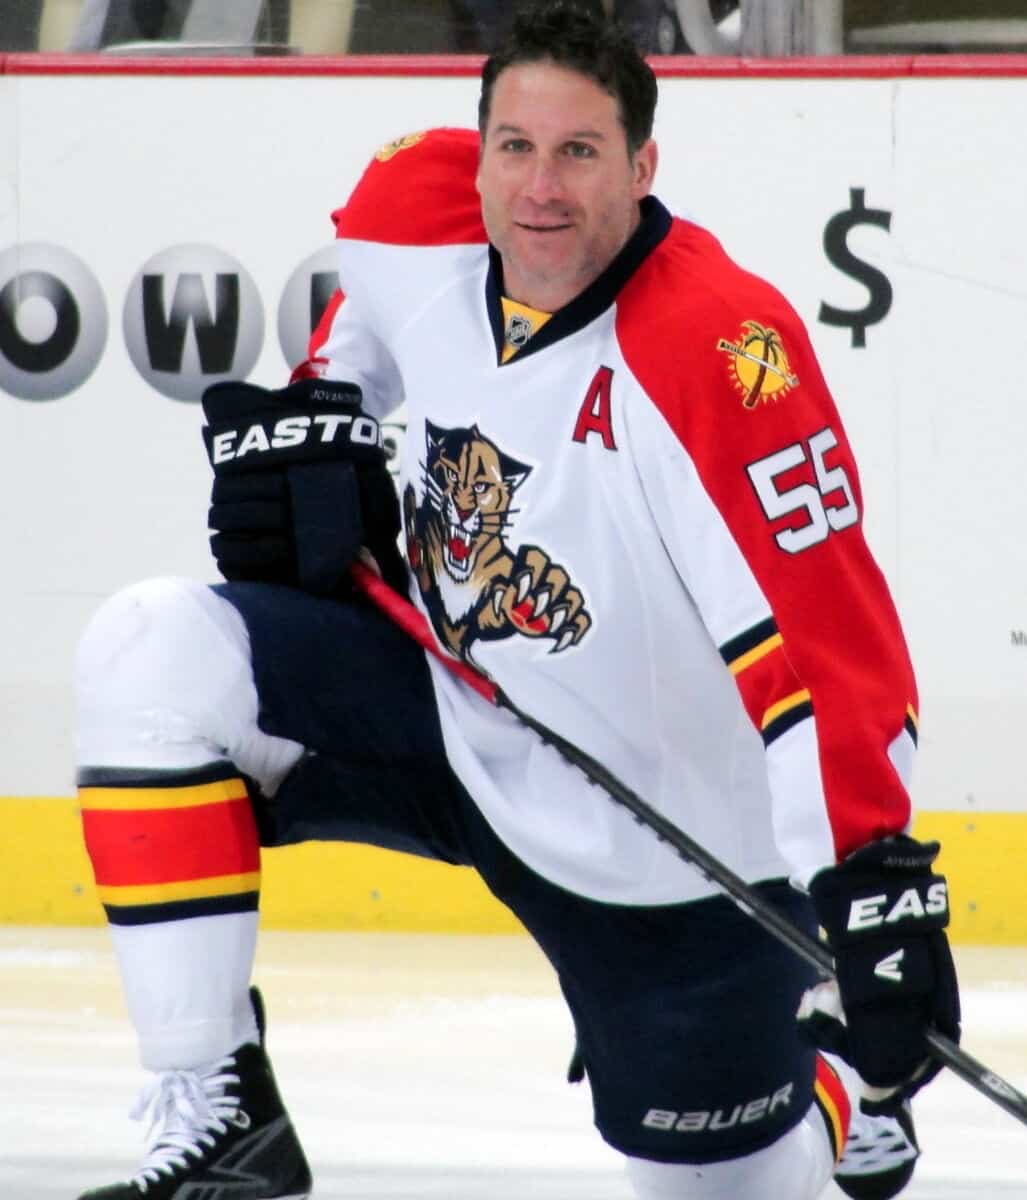 Ed Jovanovski - Famous Ice Hockey Player